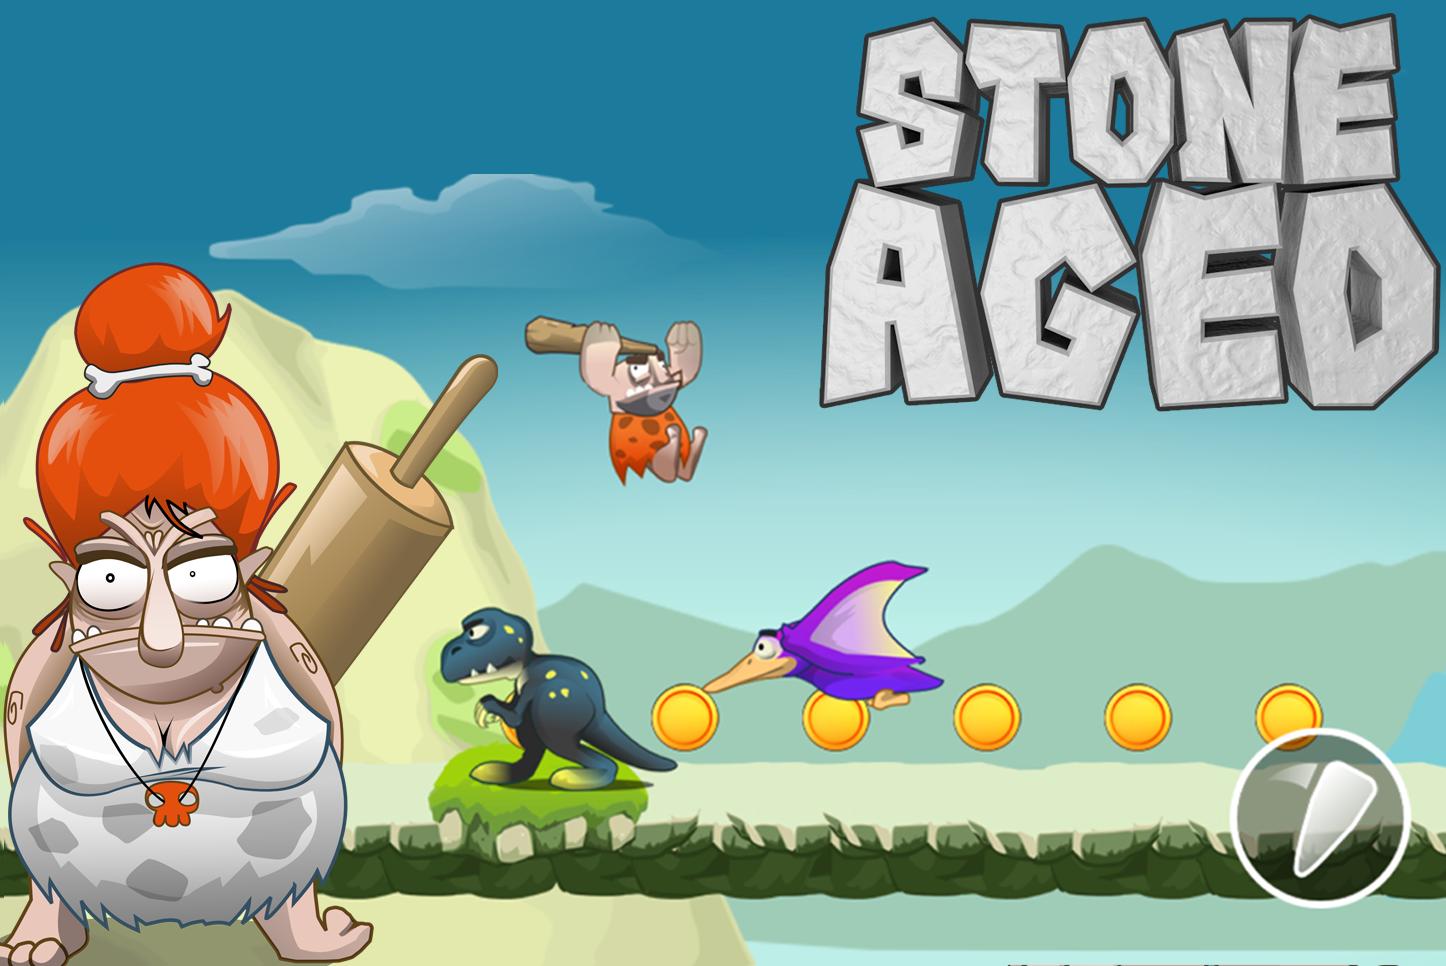 Stone runs. Игра Stone. Каменный век игра. Stone age игра андроид. Stone age игра компьютерная.